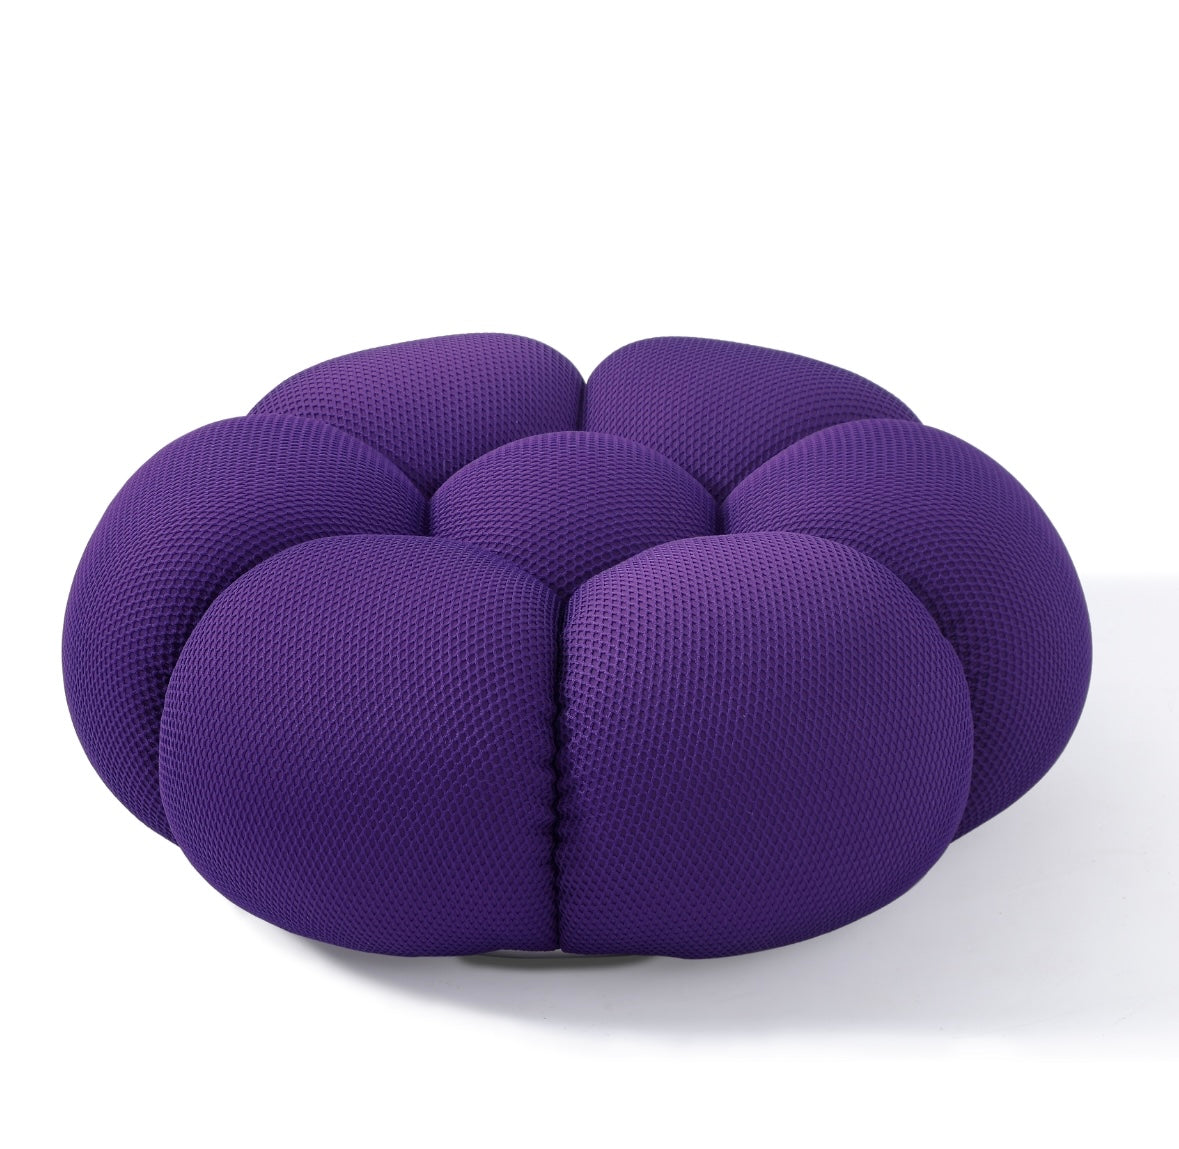 HIve chair (Swivel) in PInk & Purple Ottoman